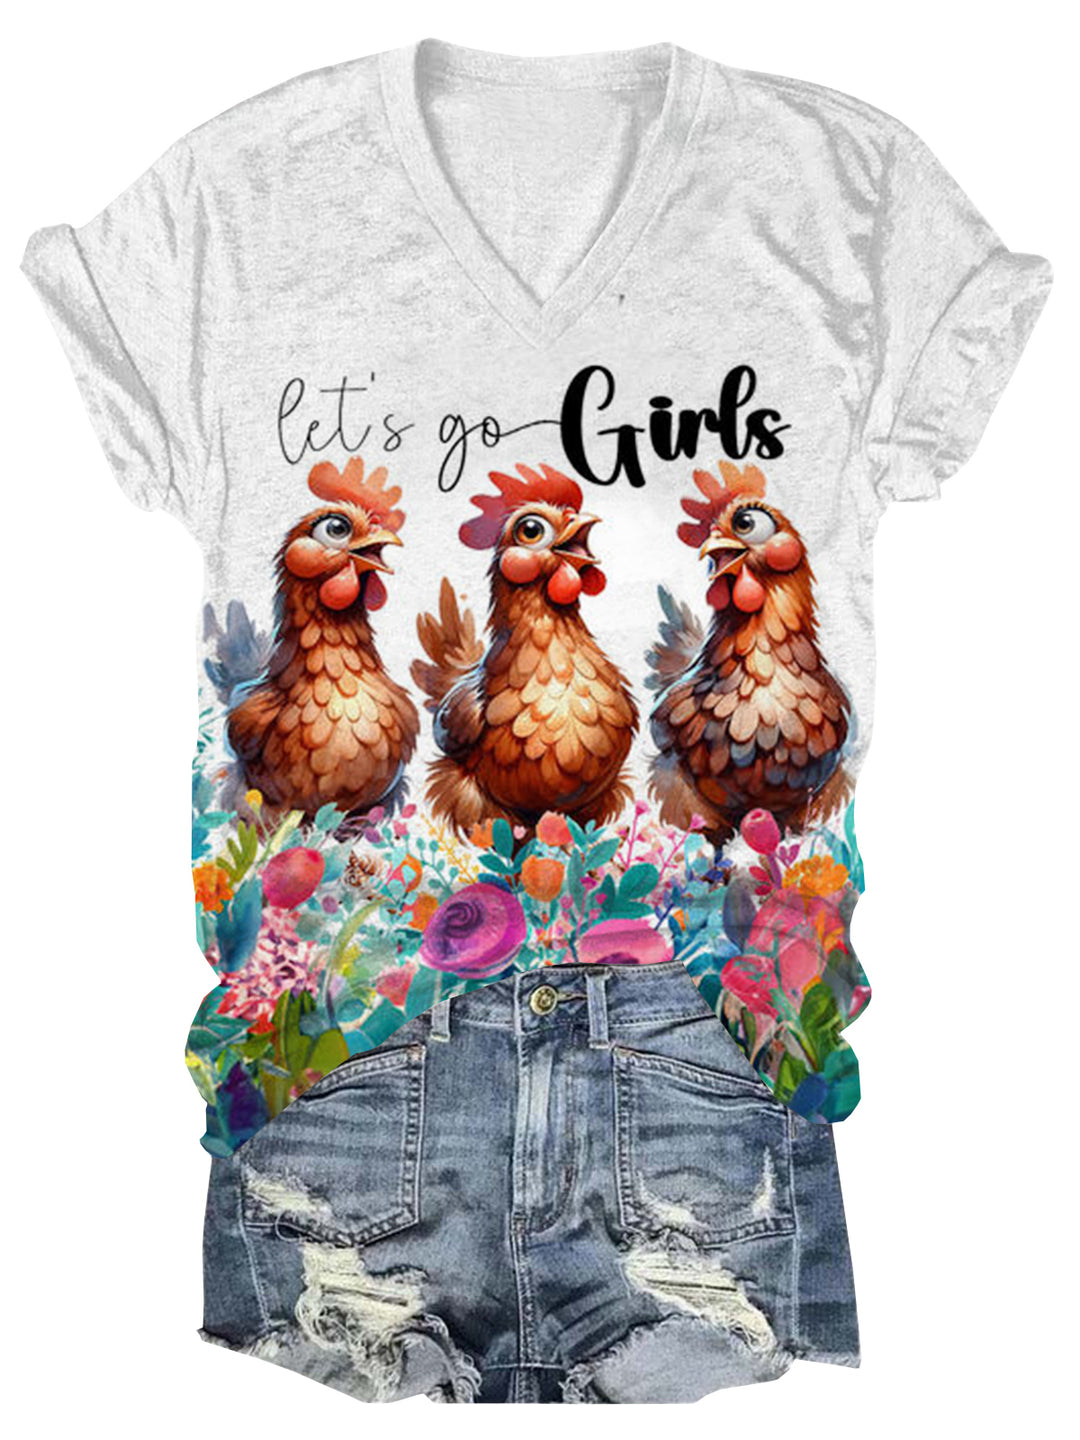 Let's Go Girls Funny Chicken V-Neck Short Sleeve T-Shirt